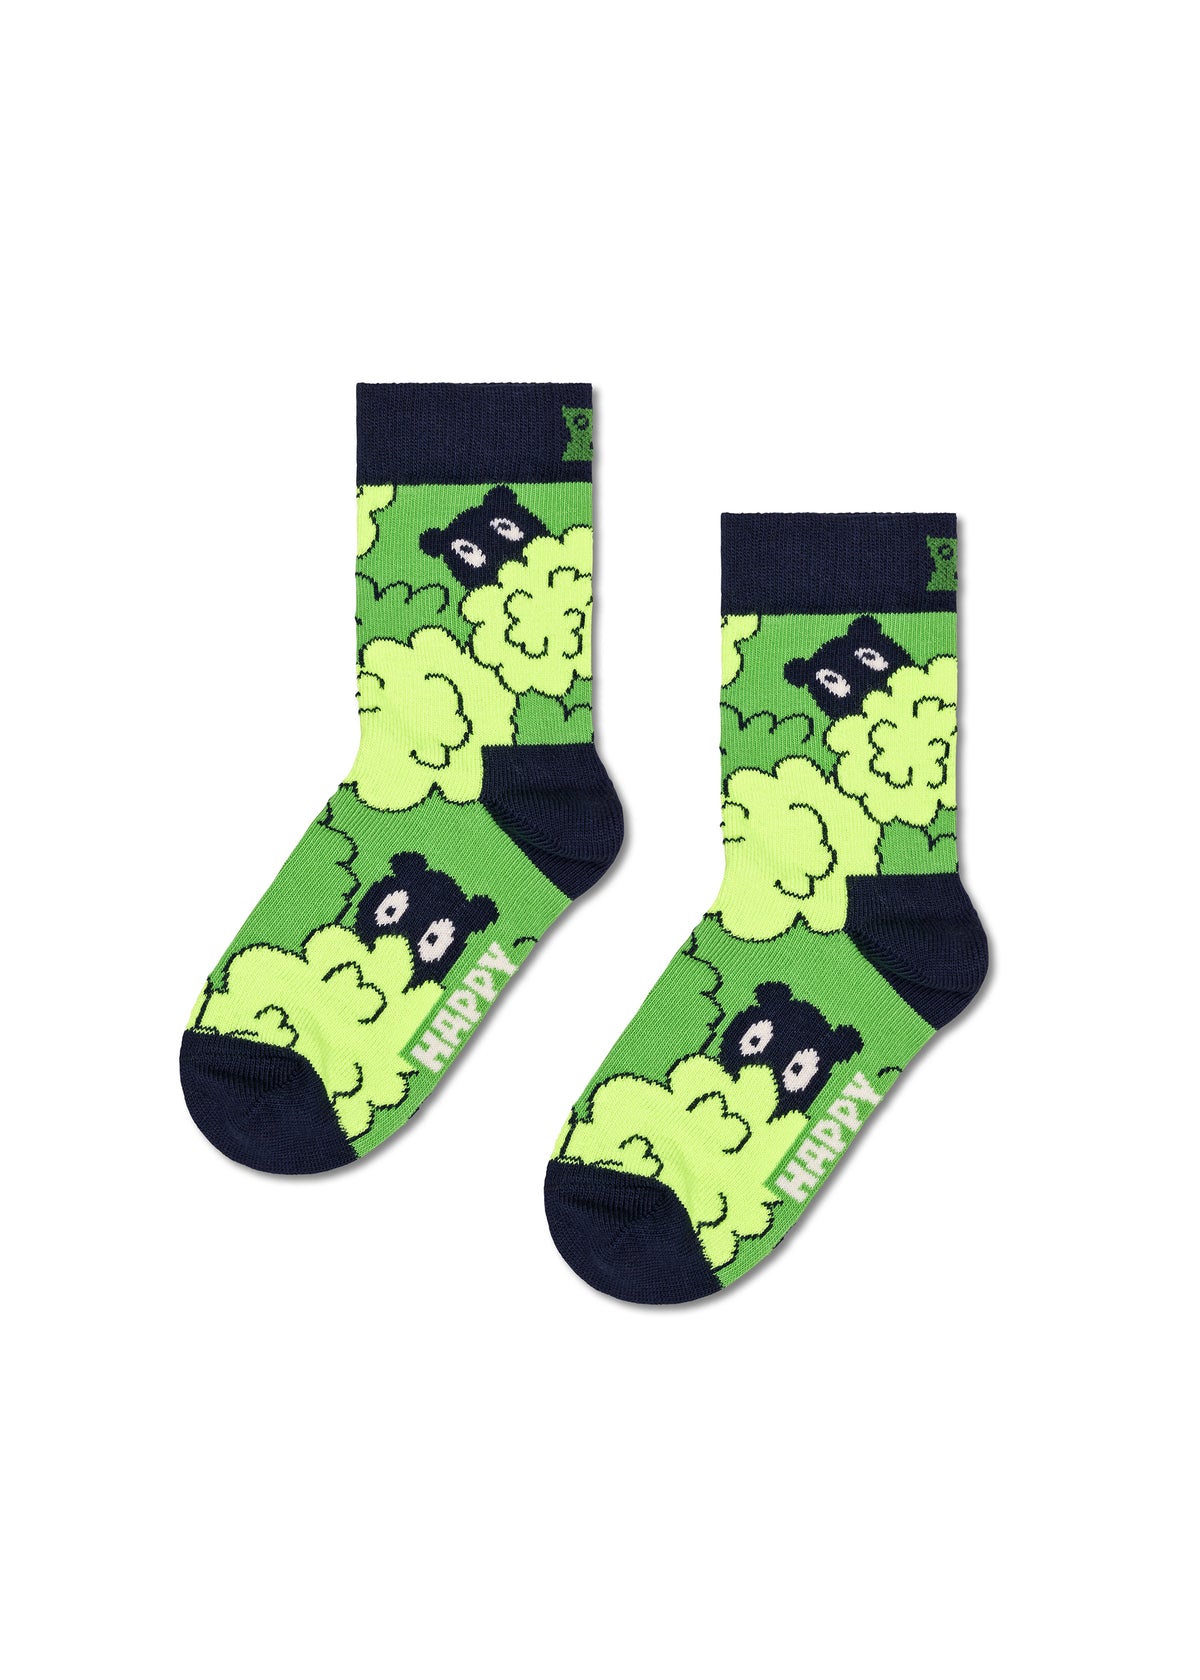 Children's socks - Peekaboo